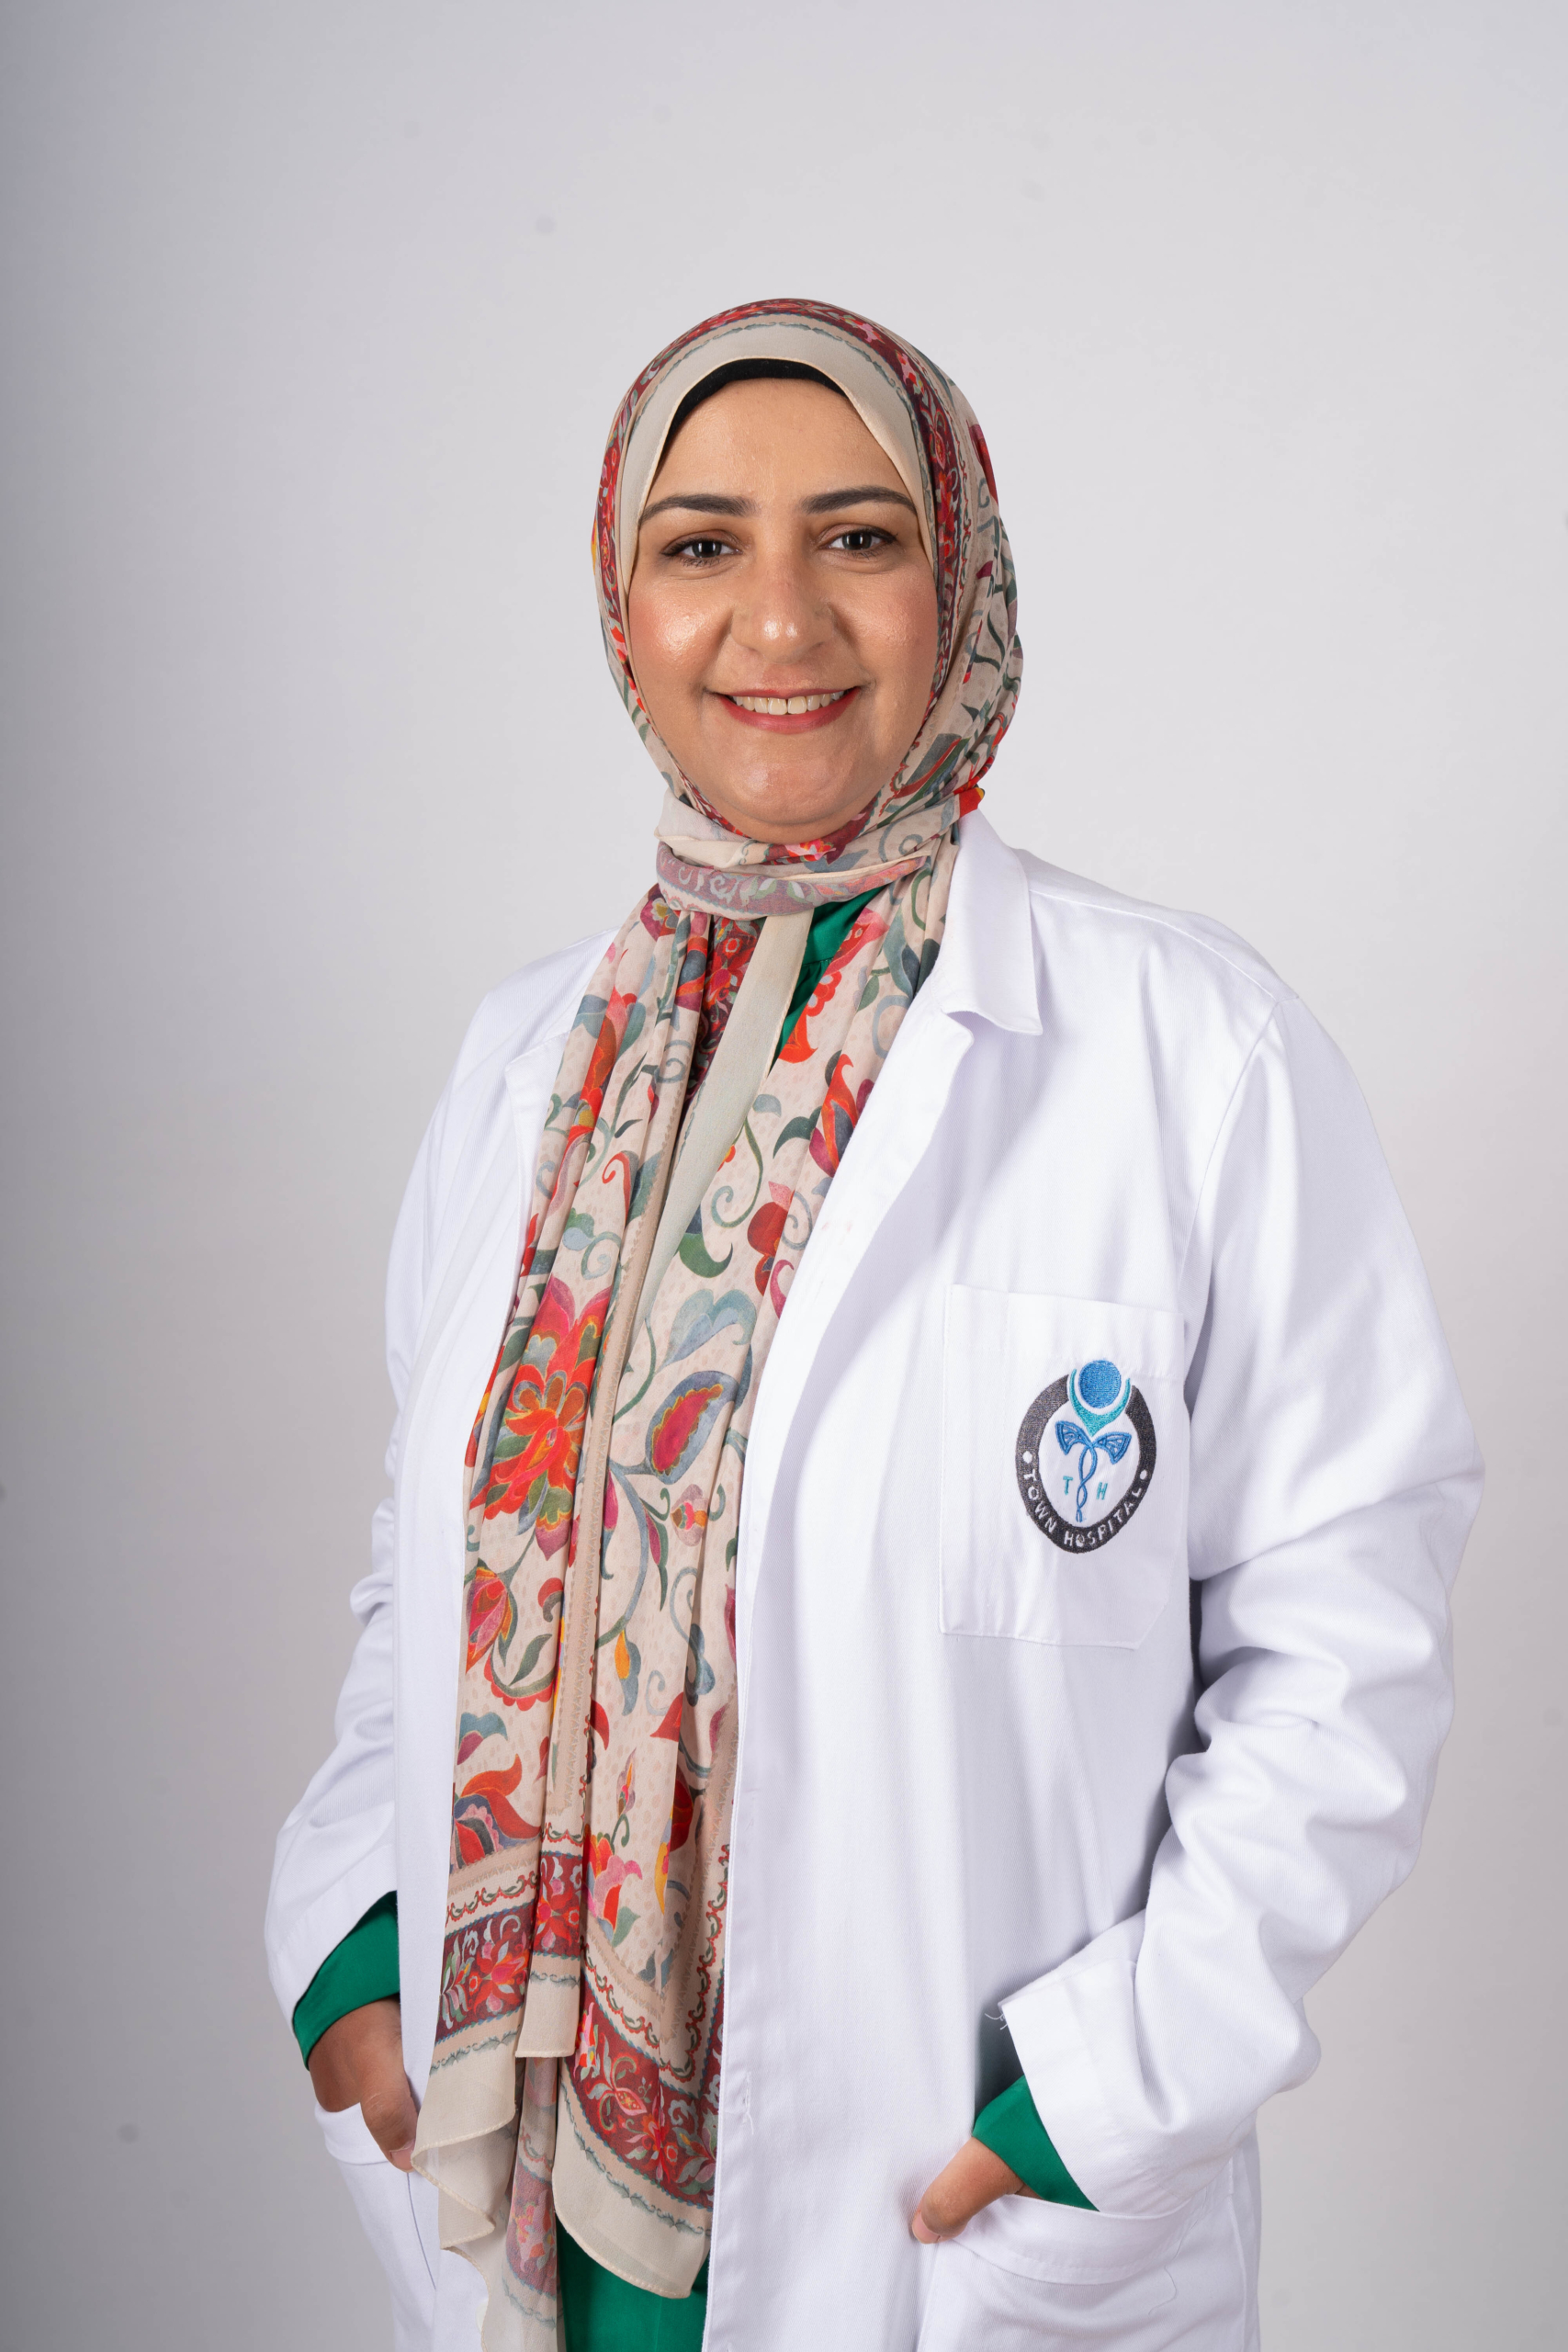 Dr Mervat Eissa